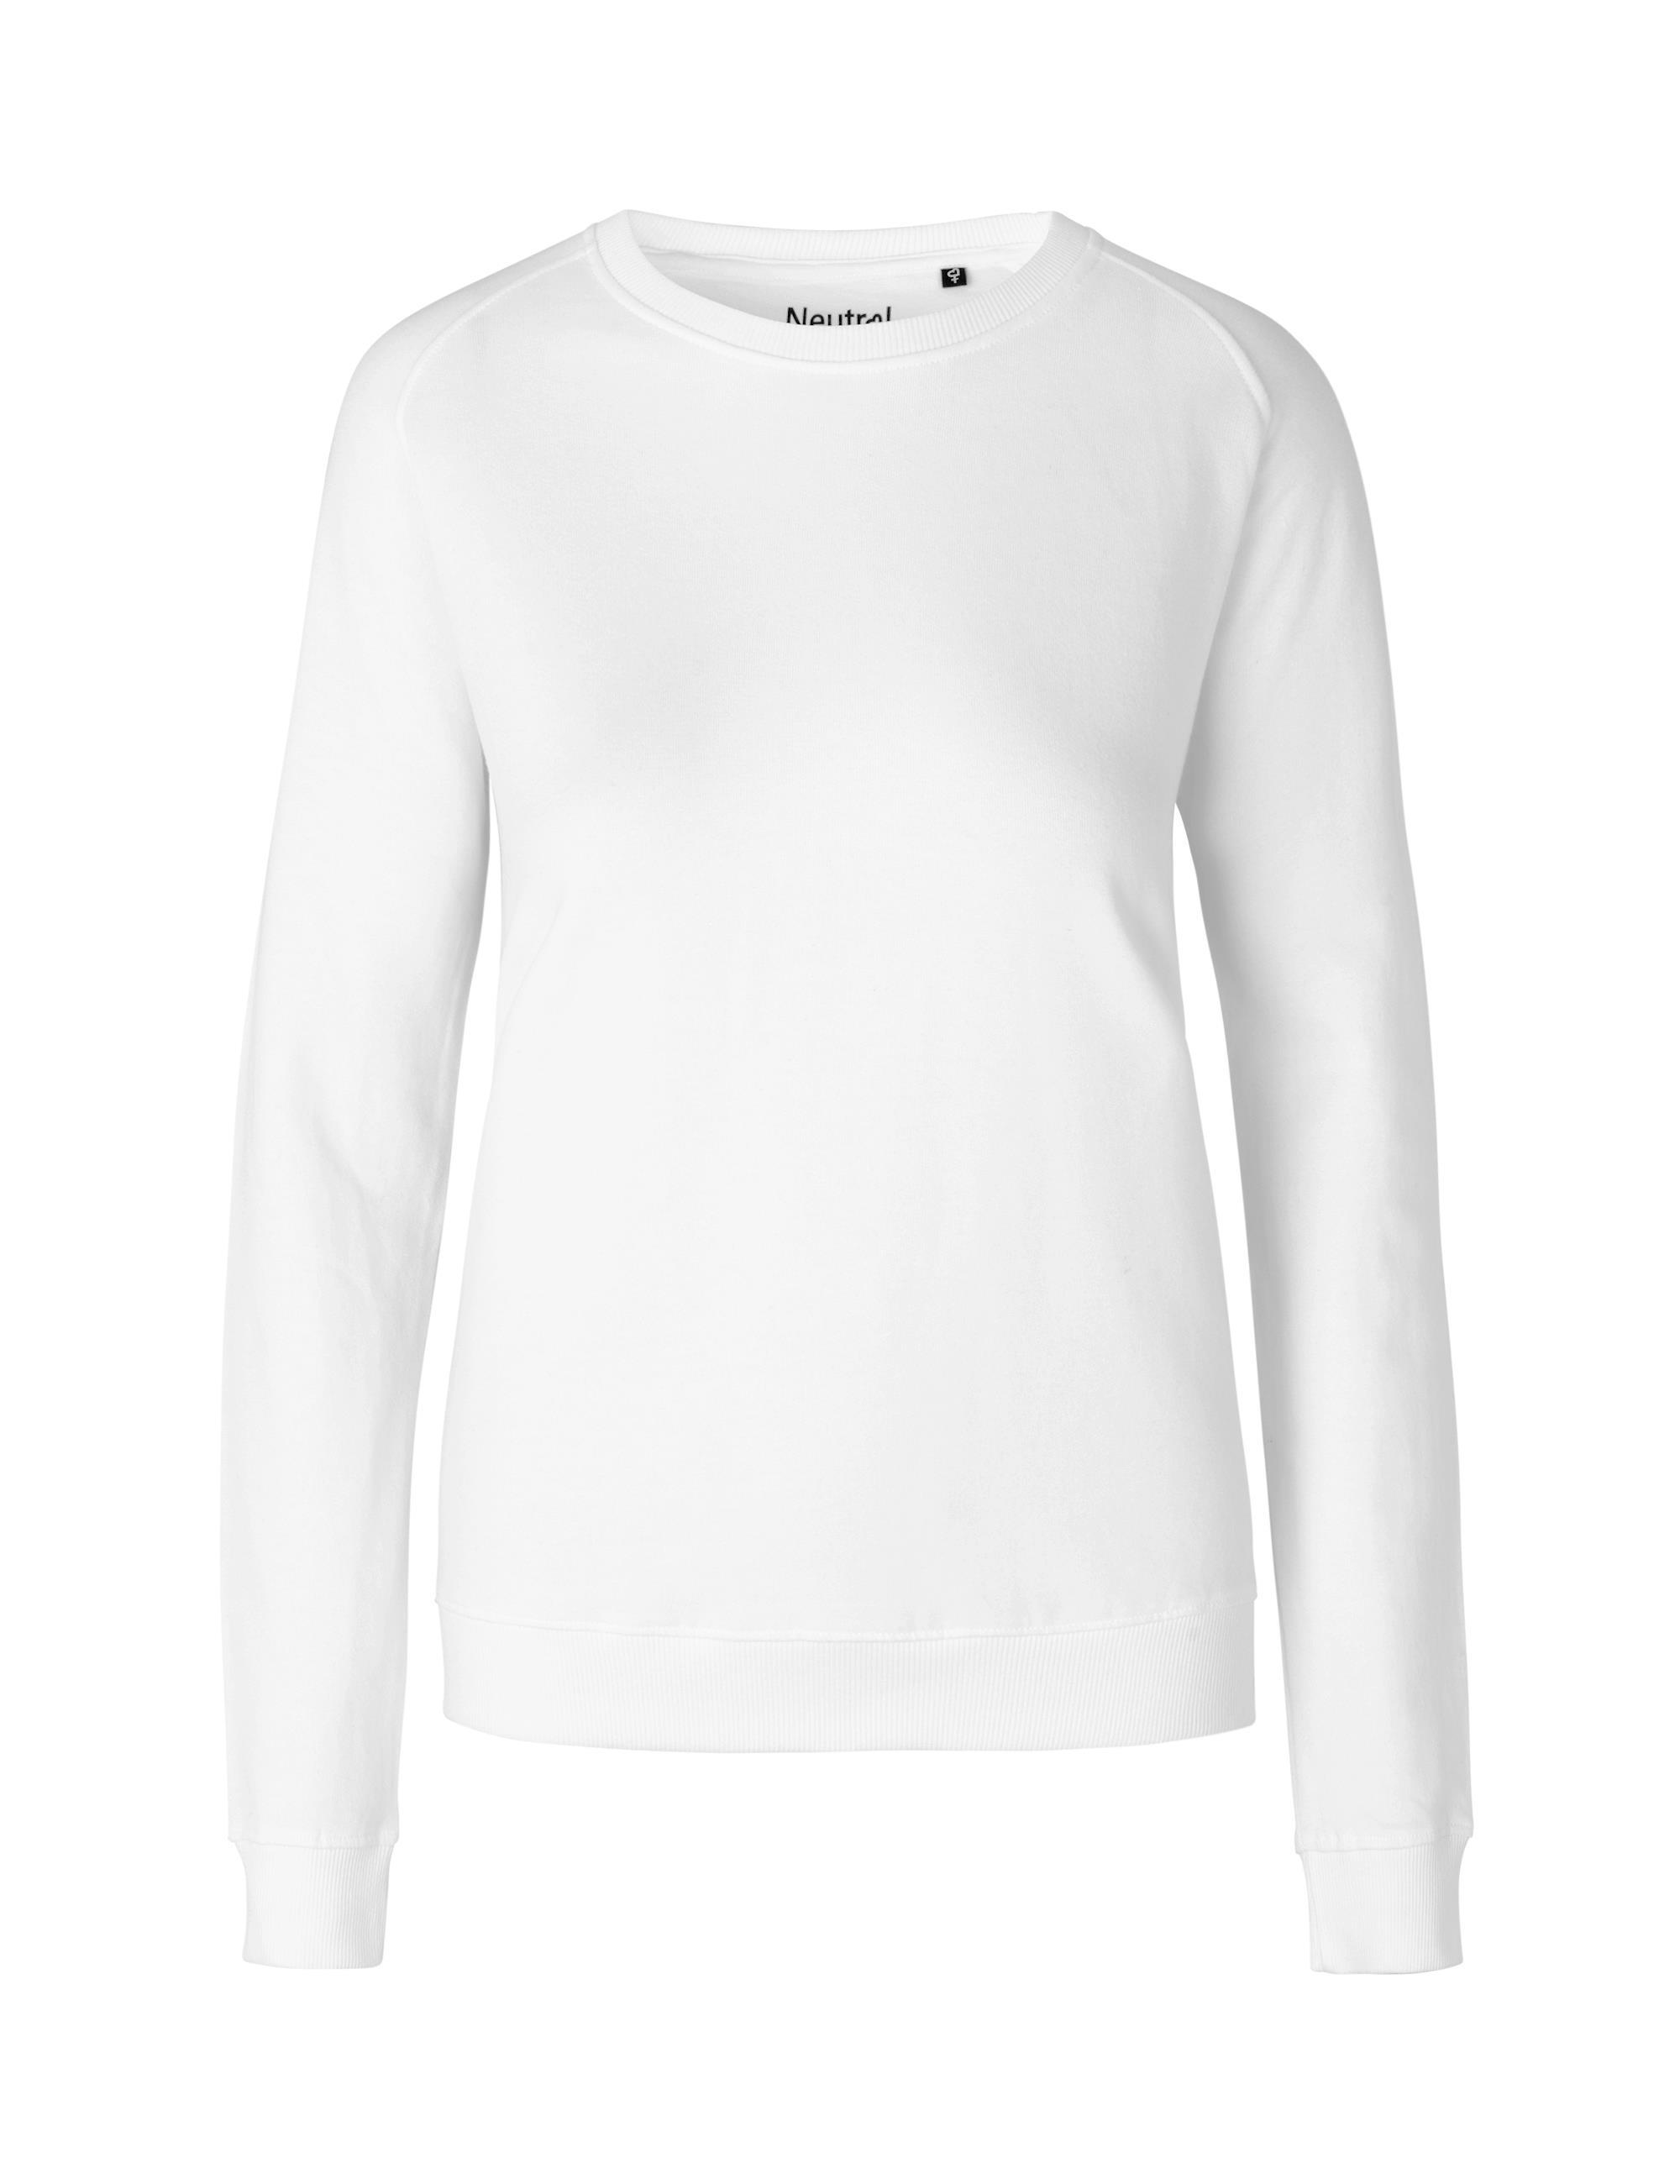 Organic Fairtrade Ladies Sweatshirt 300 g/m² Neutral® White L